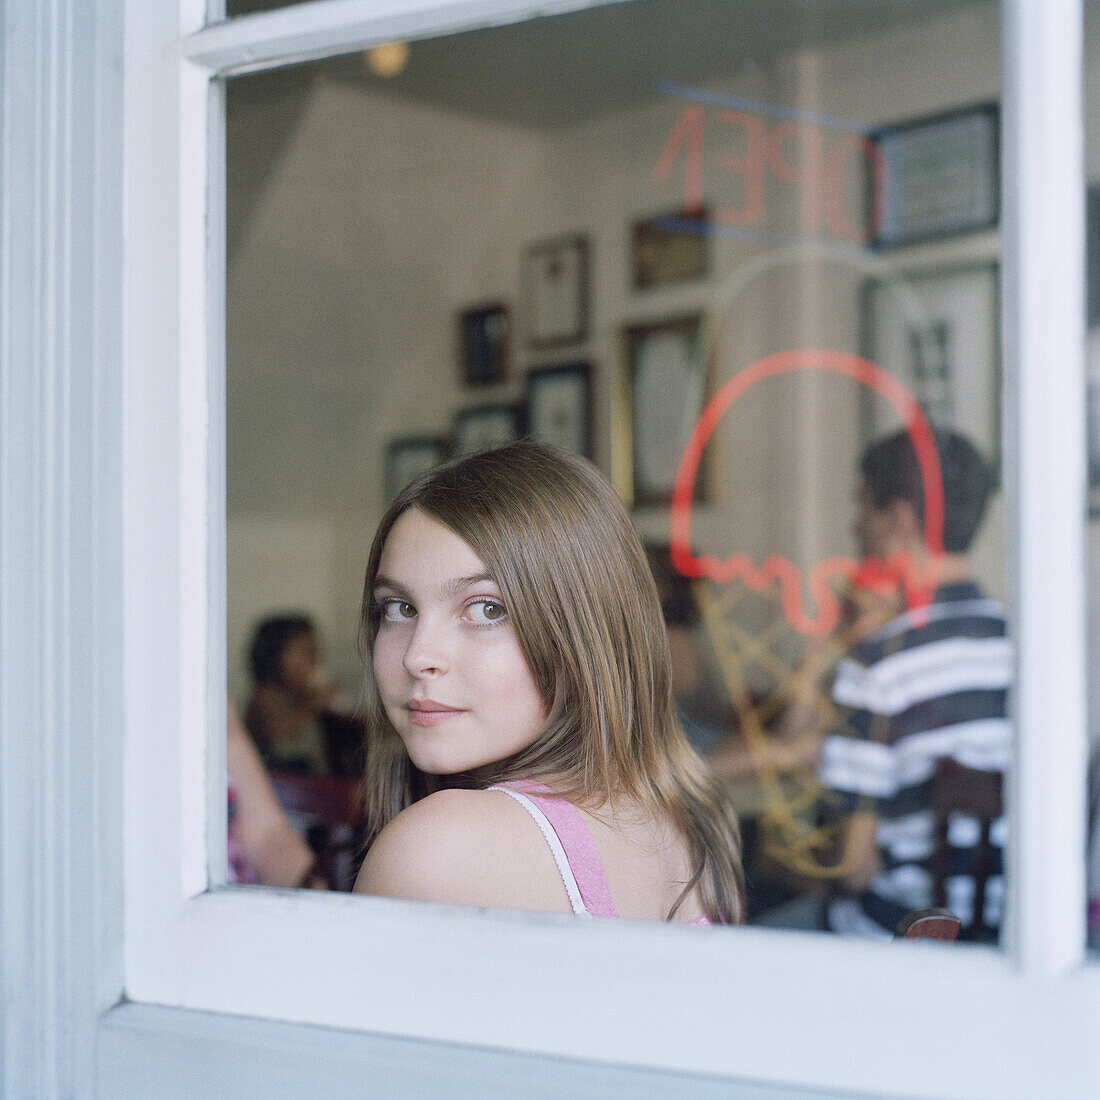 A teenage girl looking through a cafe window